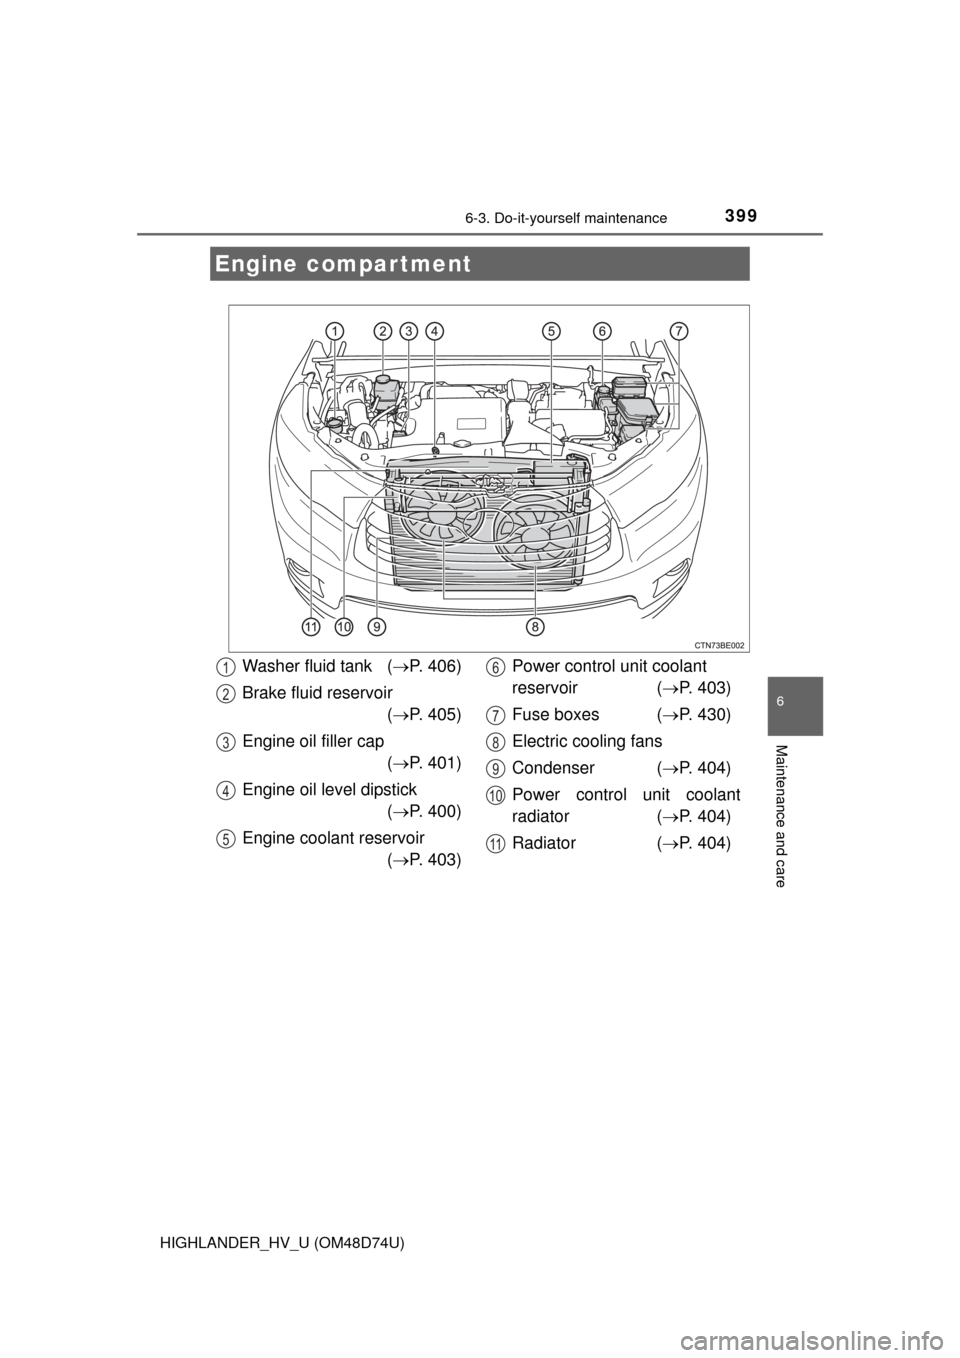 TOYOTA HIGHLANDER HYBRID 2014 XU50 / 3.G Owners Manual 3996-3. Do-it-yourself maintenance
HIGHLANDER_HV_U (OM48D74U)
6
Maintenance and care
Engine compartment
Washer fluid tank (P. 406)
Brake fluid reservoir ( P. 405)
Engine oil filler cap ( P. 4